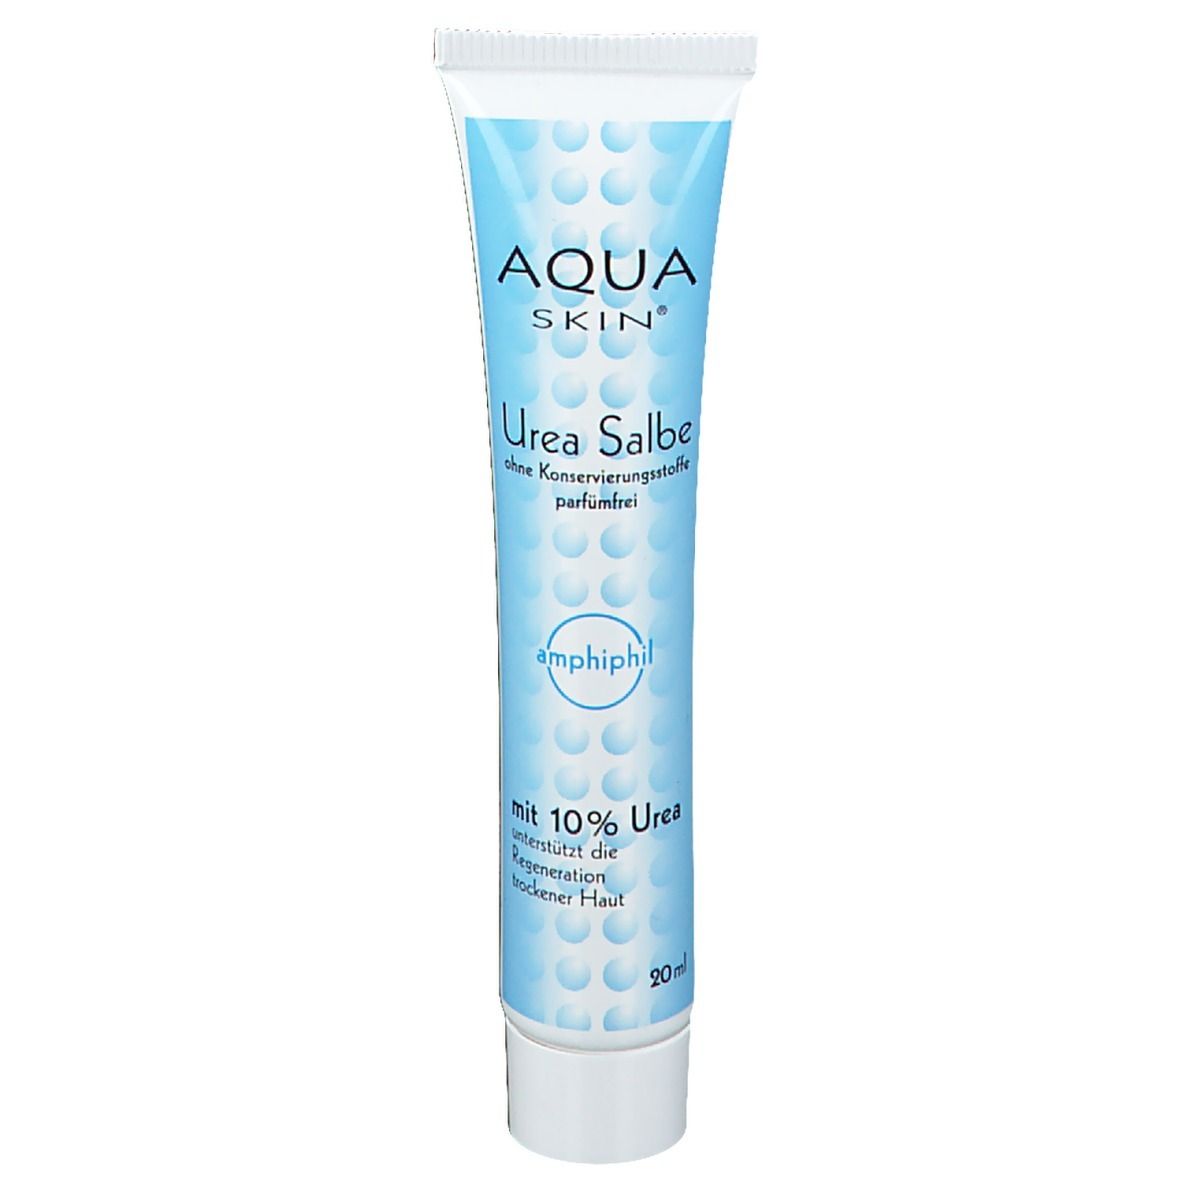 Aqua Skin® Urea Salbe